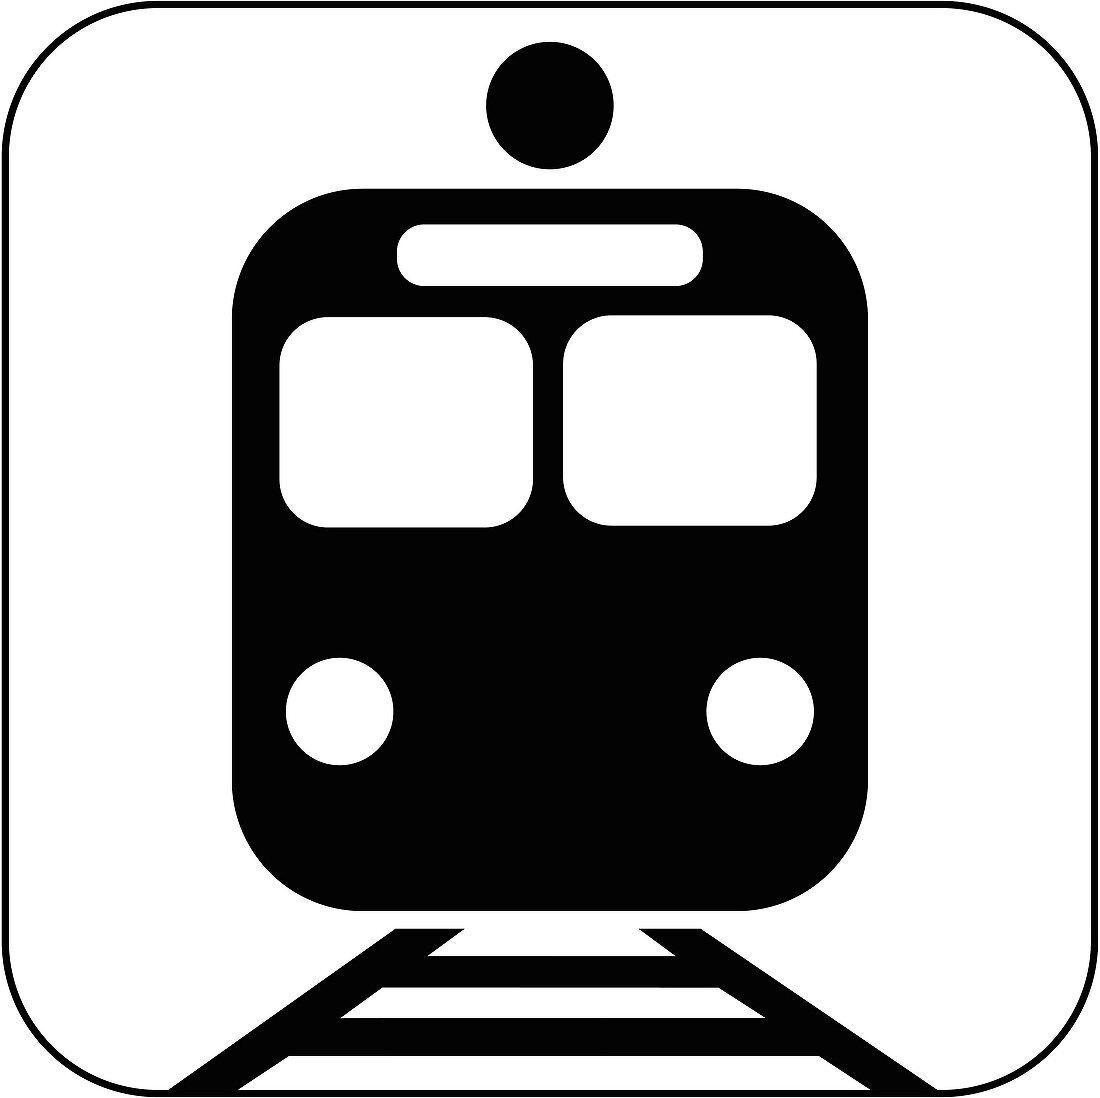 Suburban train symbol,artwork